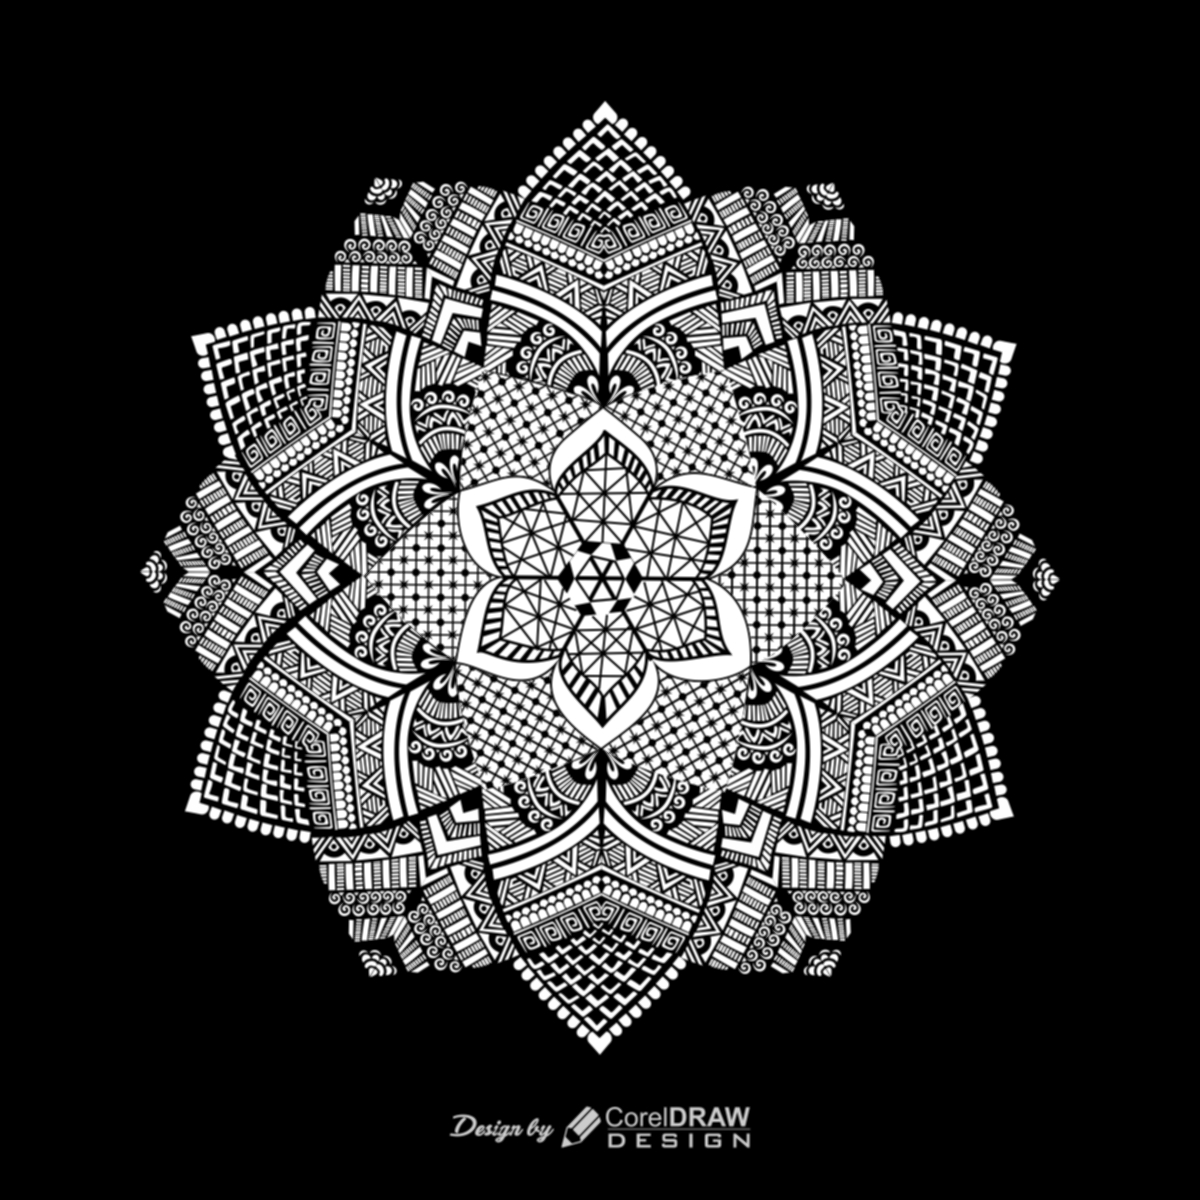 Handmade Vector Mandala Design on Dark Background